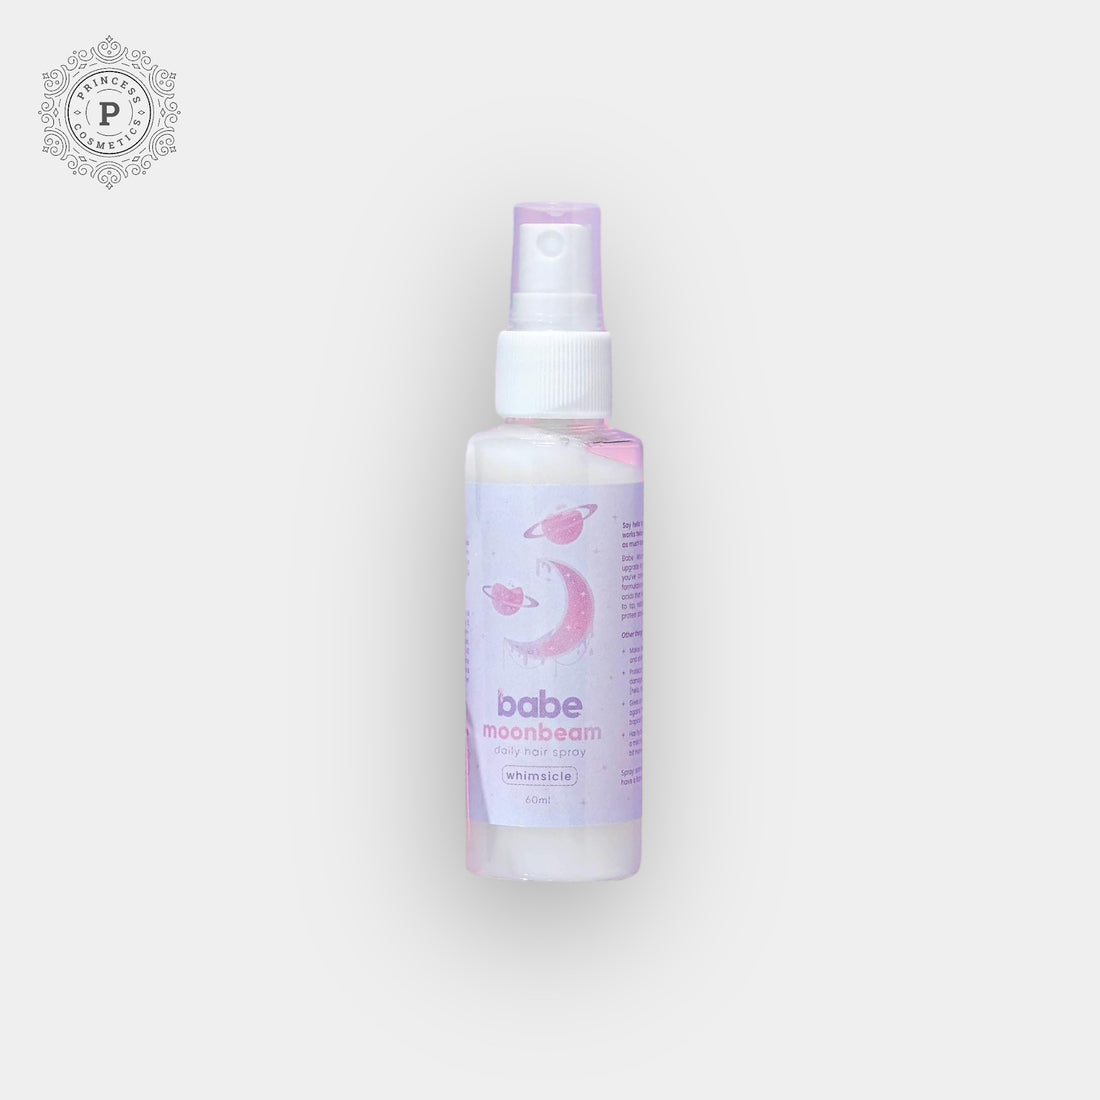 Babe Formula Moonbeam Daily Hair Spray 60ml - Whimsicle